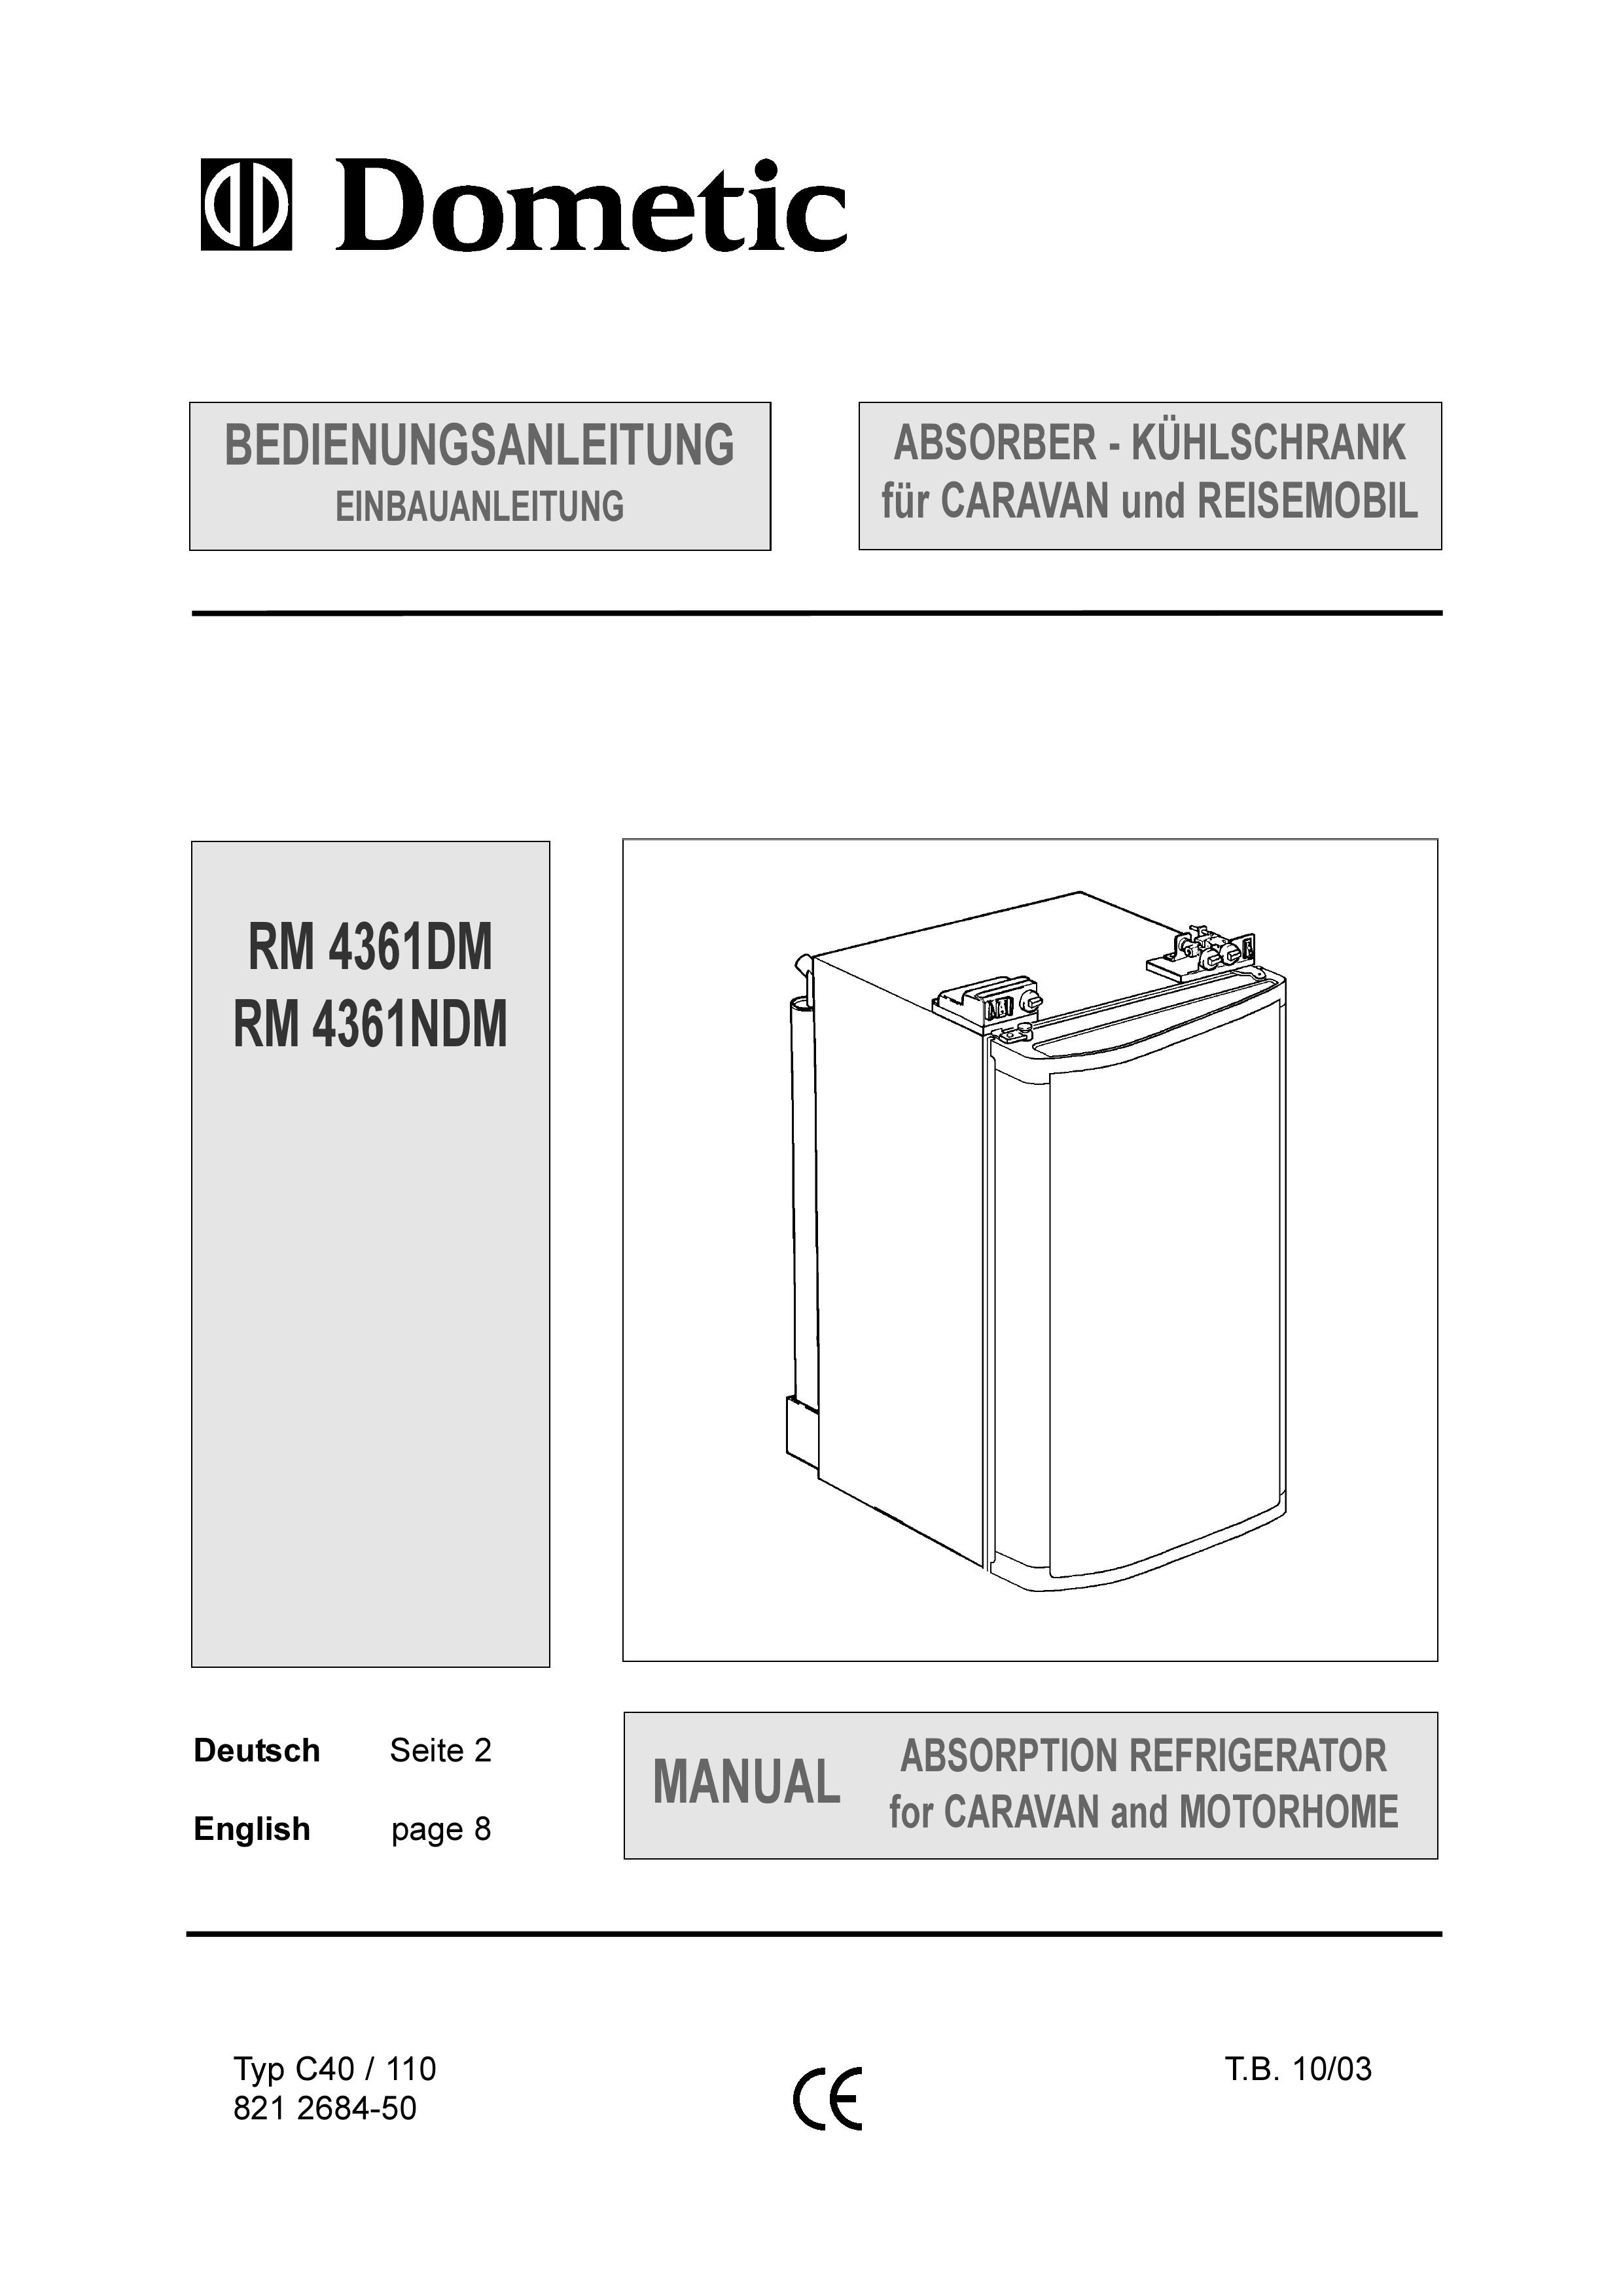 Dometic RM 4361DM Refrigerator User Manual